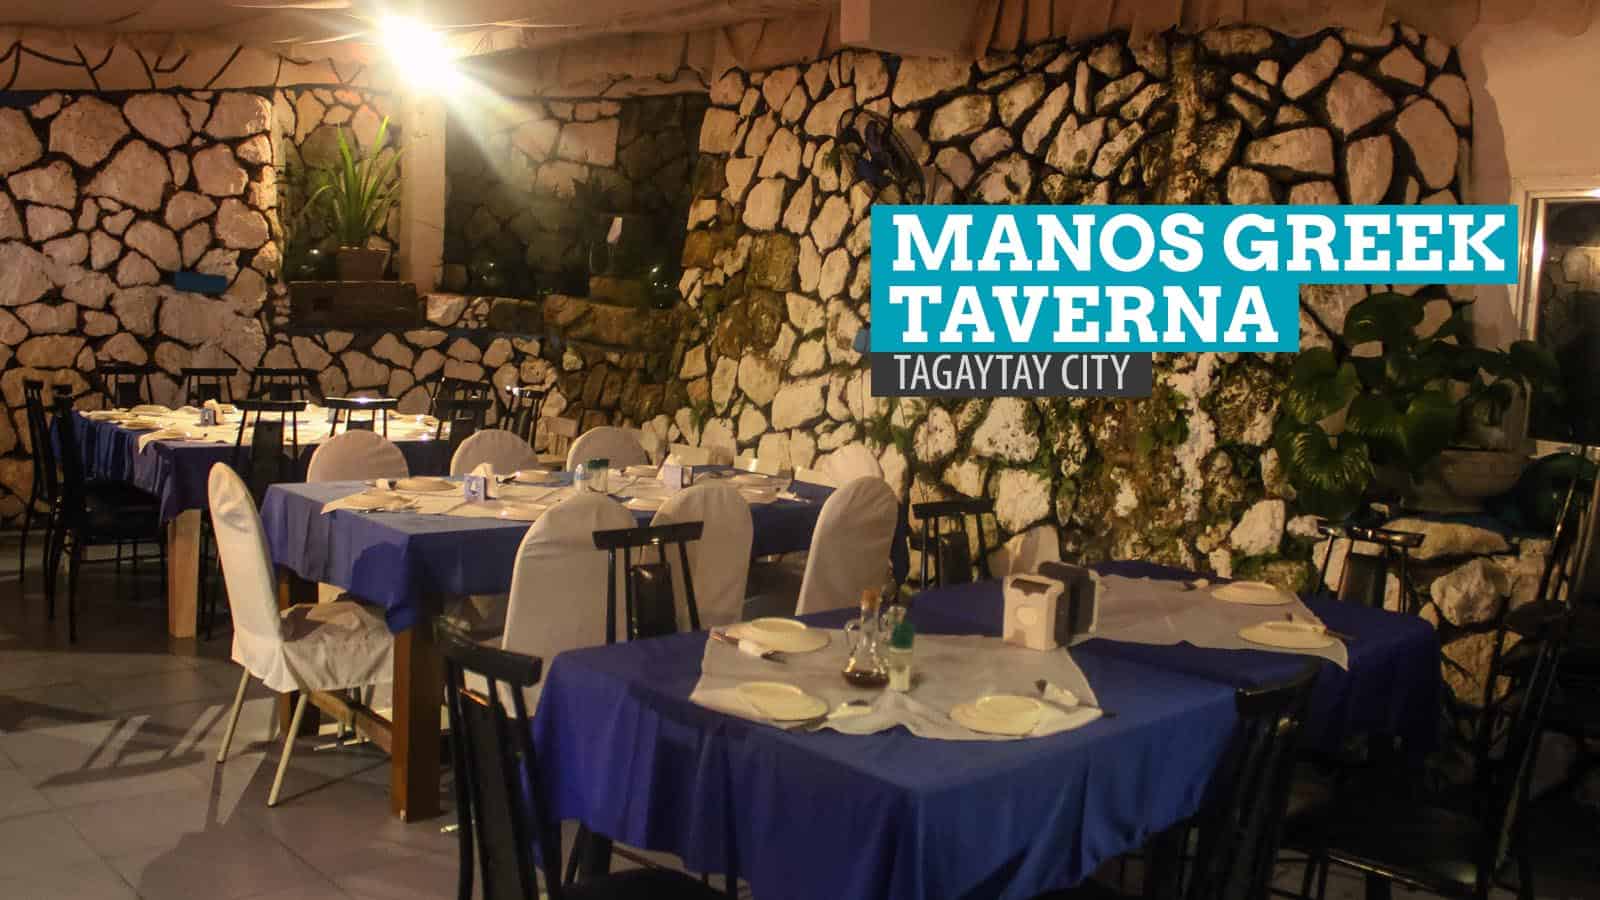 Manos Greek Taverna: Where to Eat in Tagaytay City, Philippines